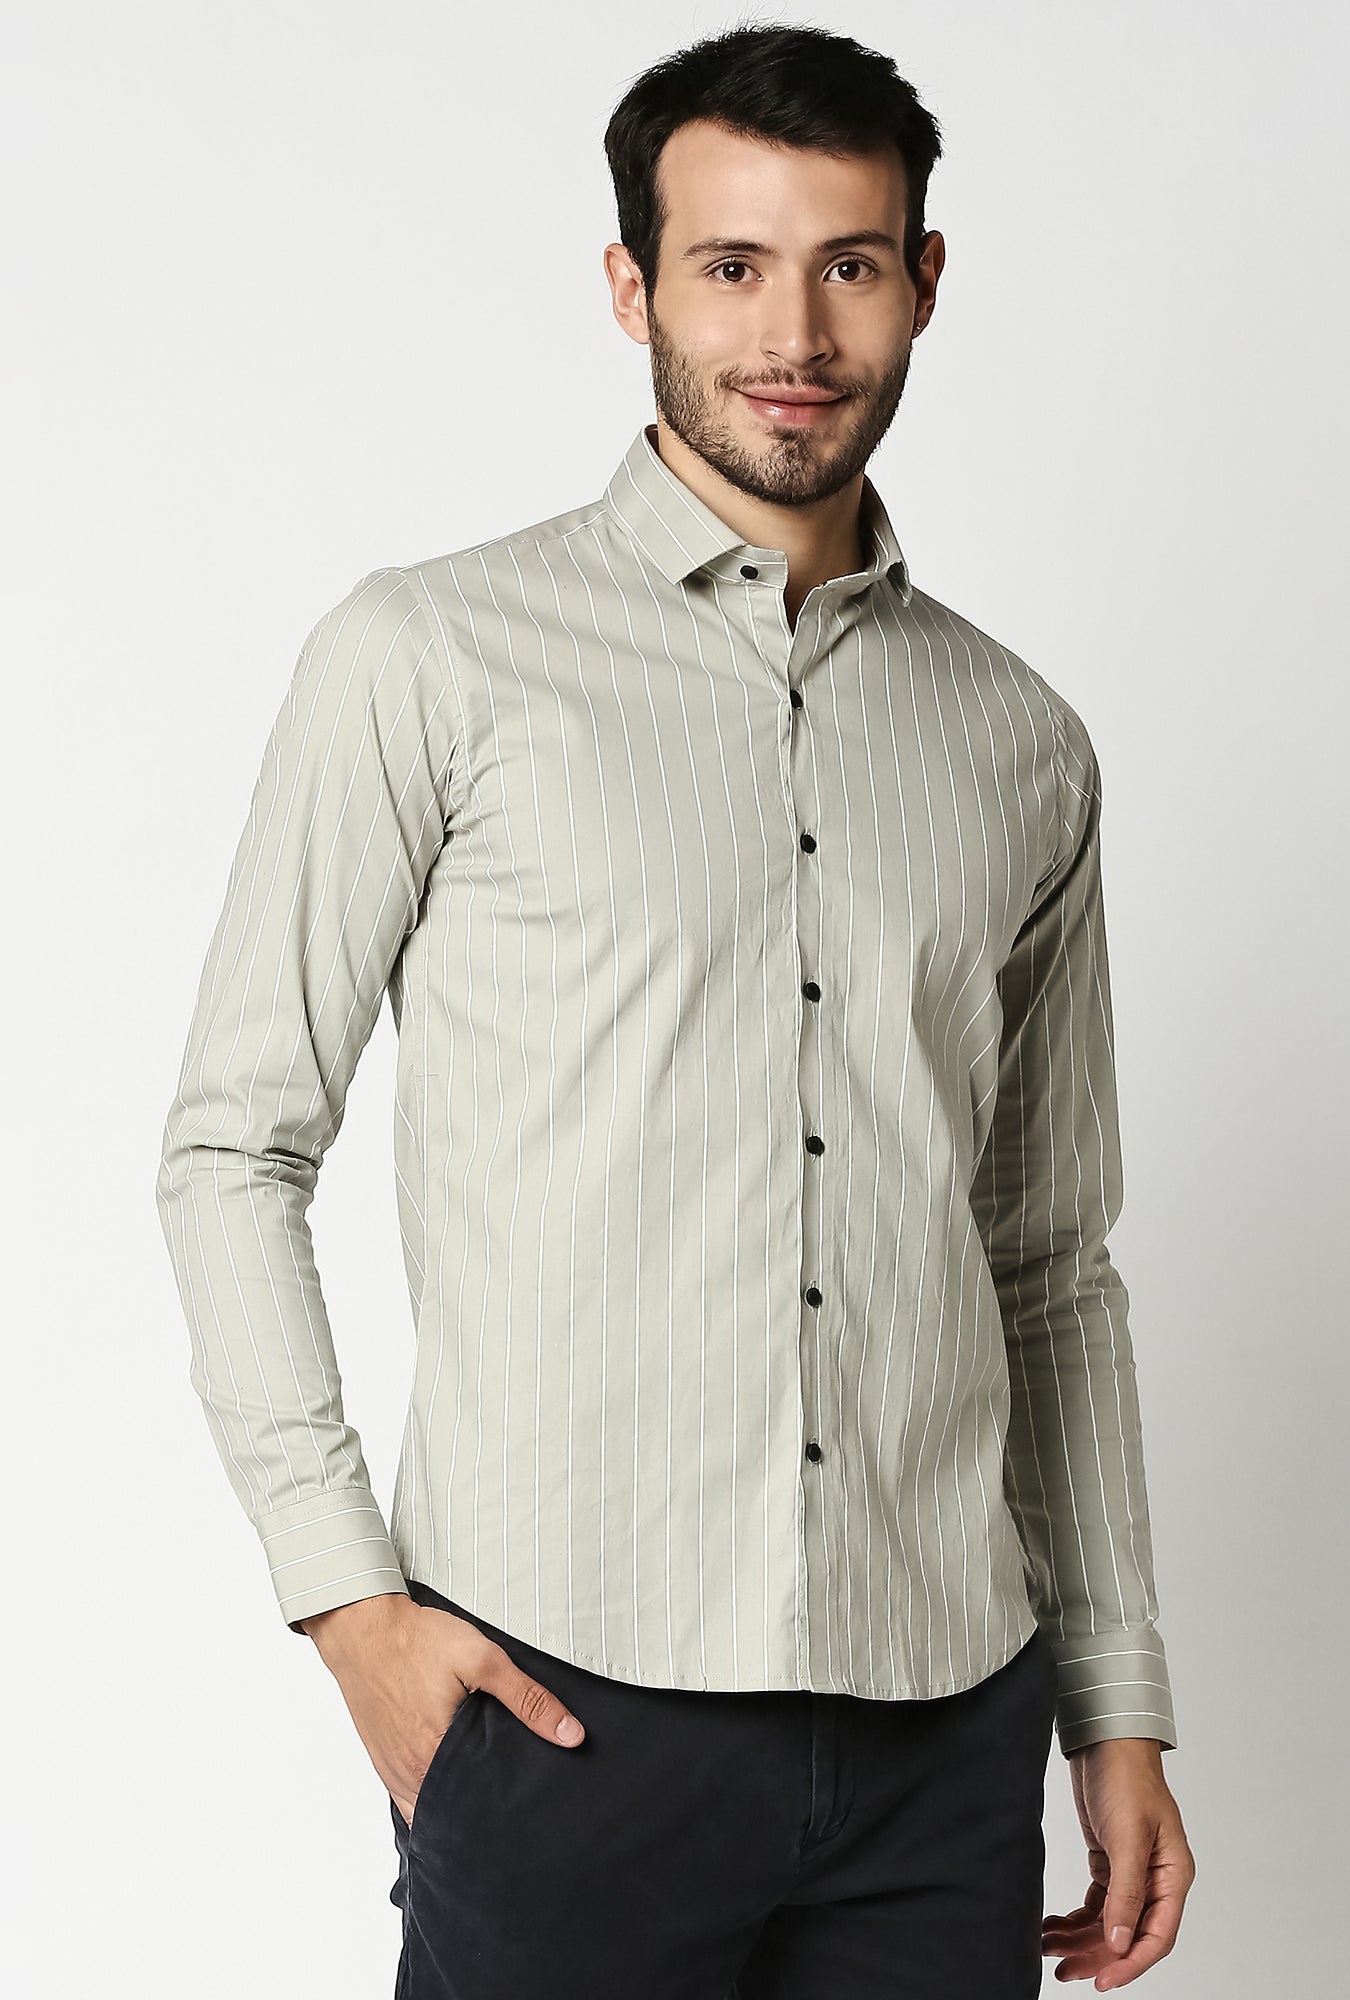 Fostino Stripes Grey Full Sleeves Shirt - Fostino - Shirts